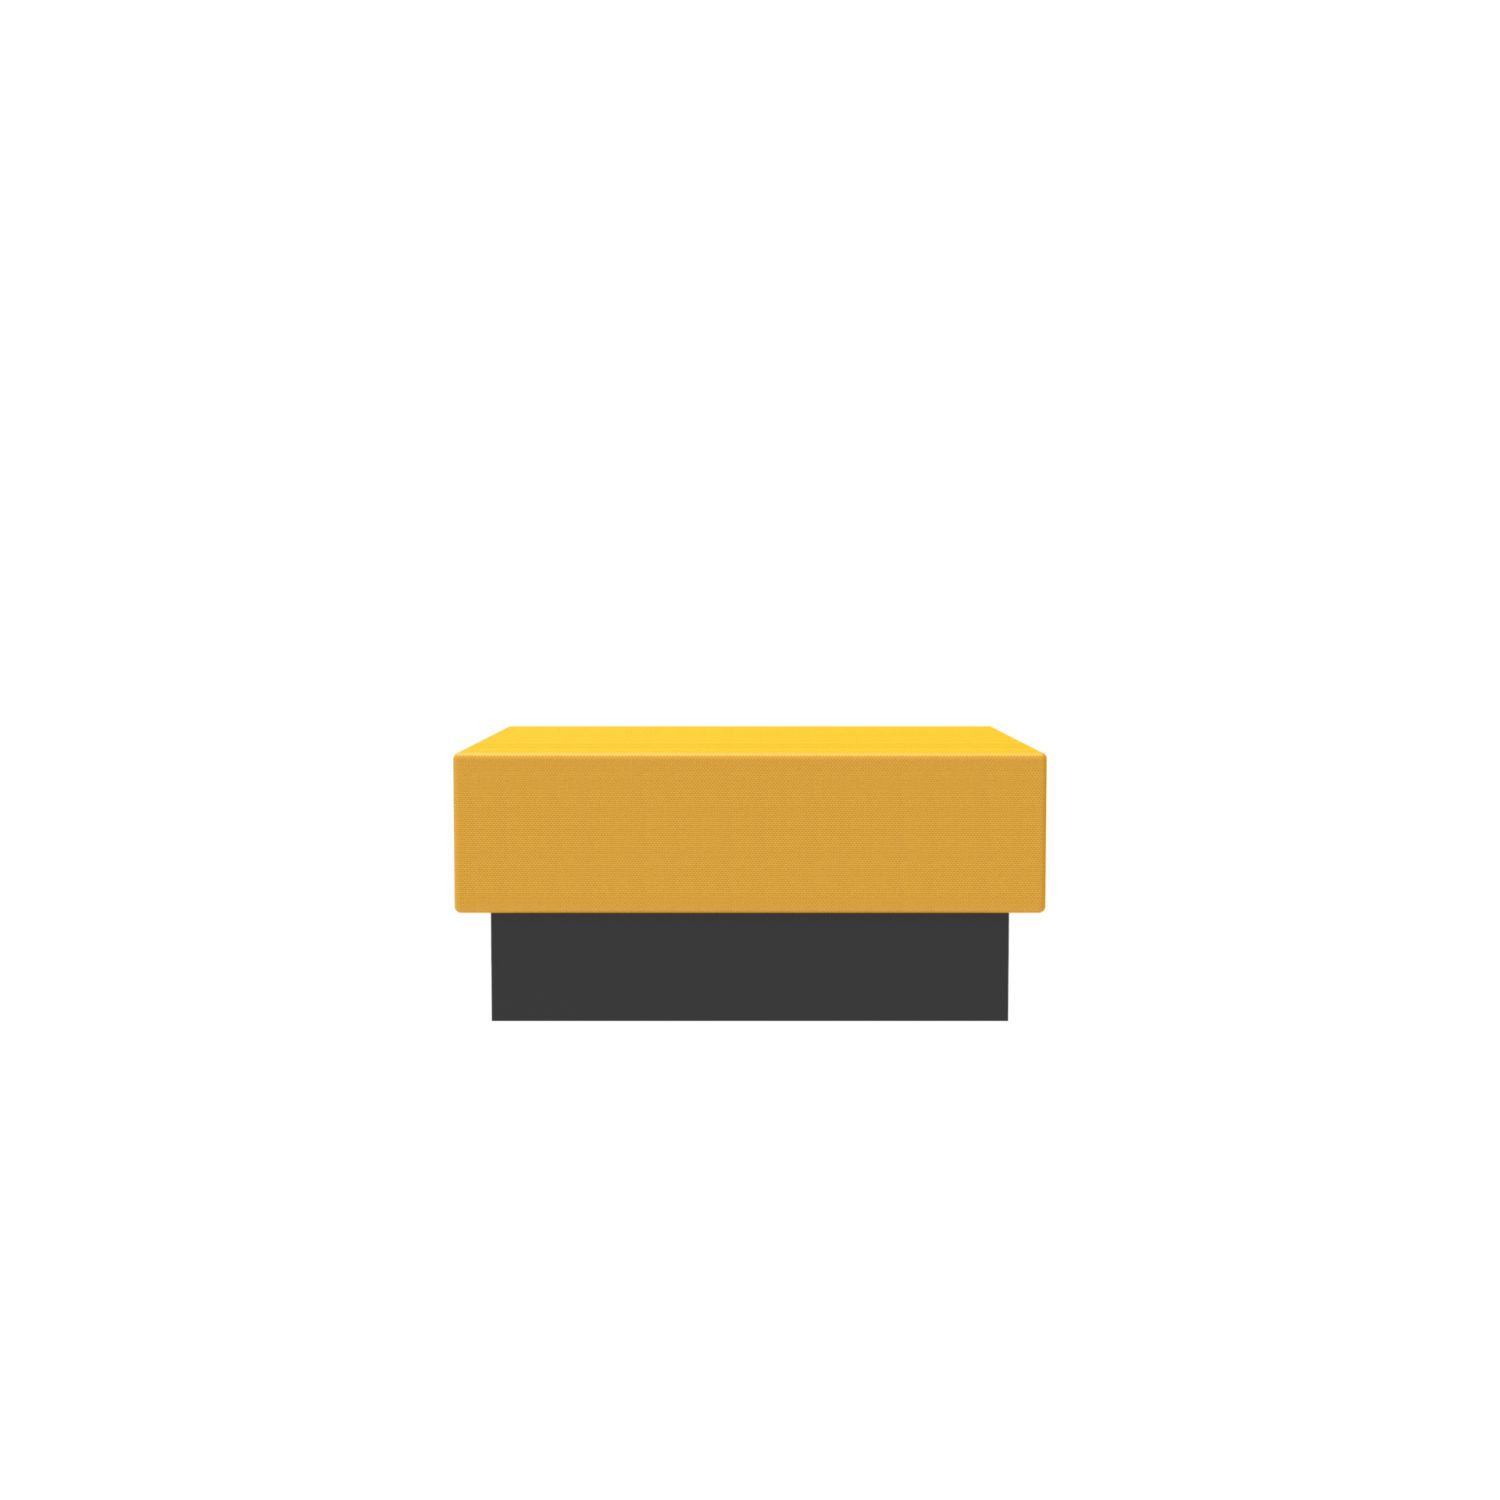 lensvelt oma blocks relaxing edition closed base without backrest 90 cm width lemon yellow 051 black ral9005 hard leg ends